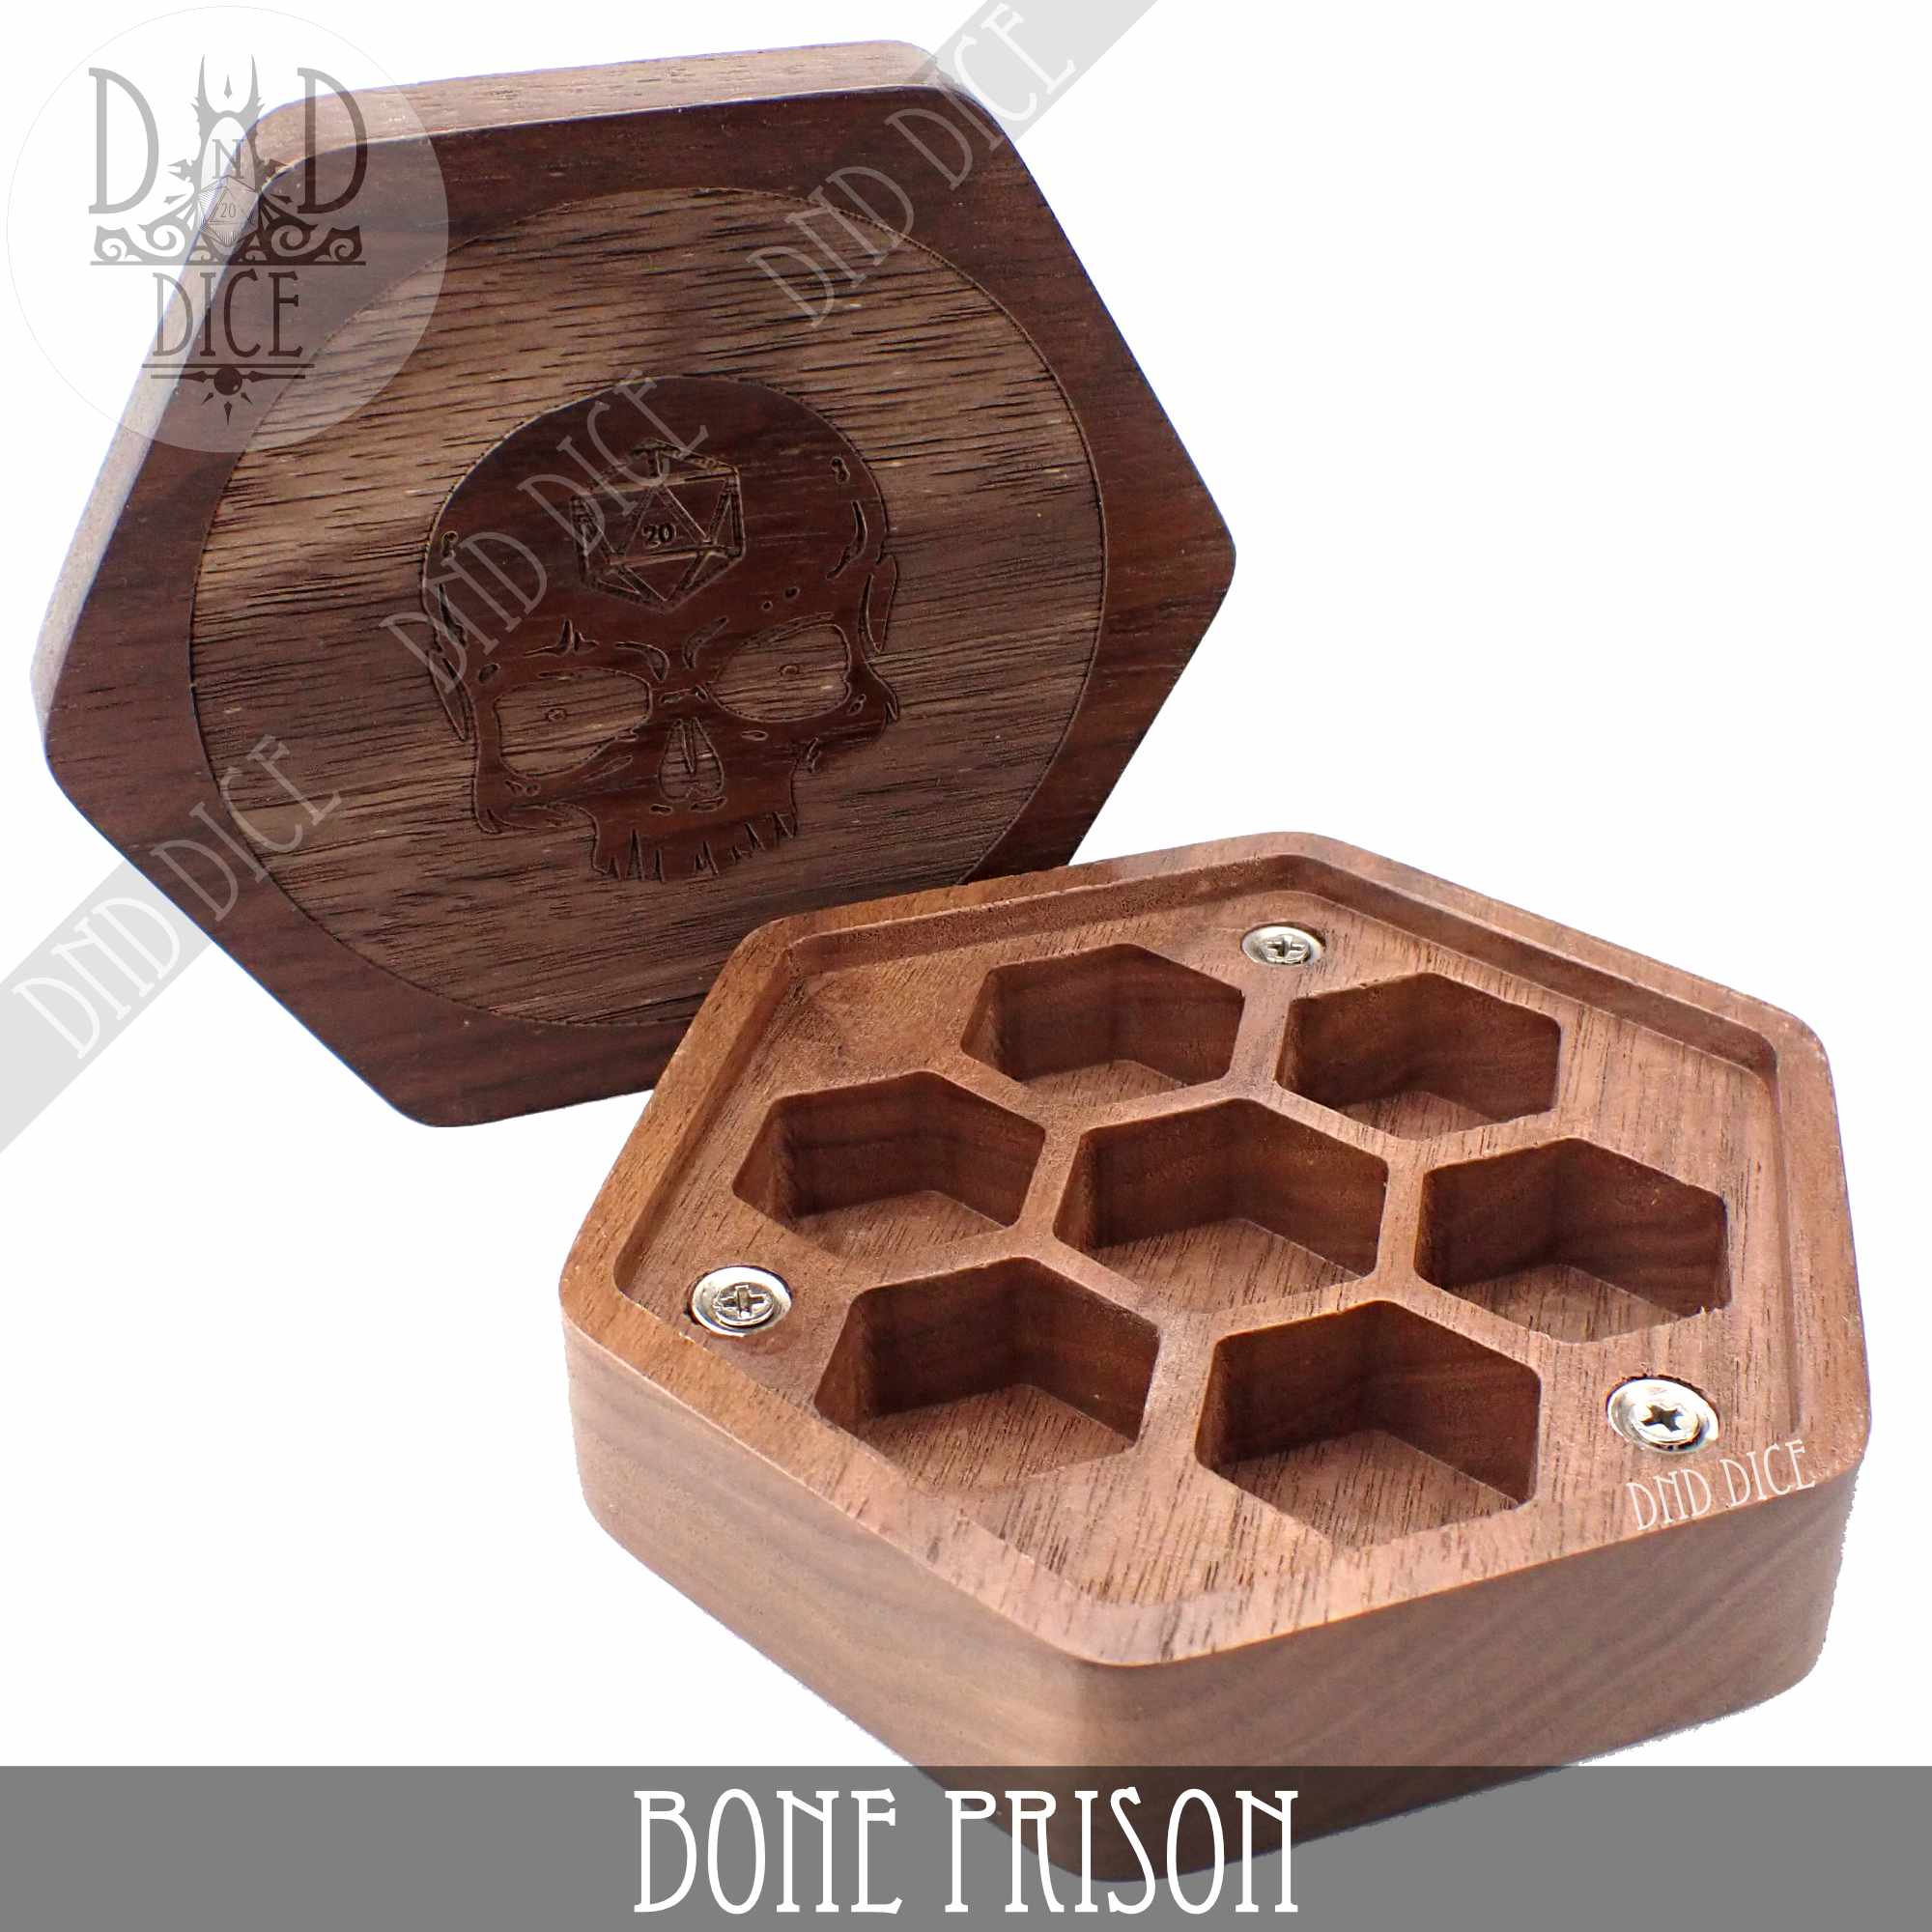 Bone Prison Wood Dice Box